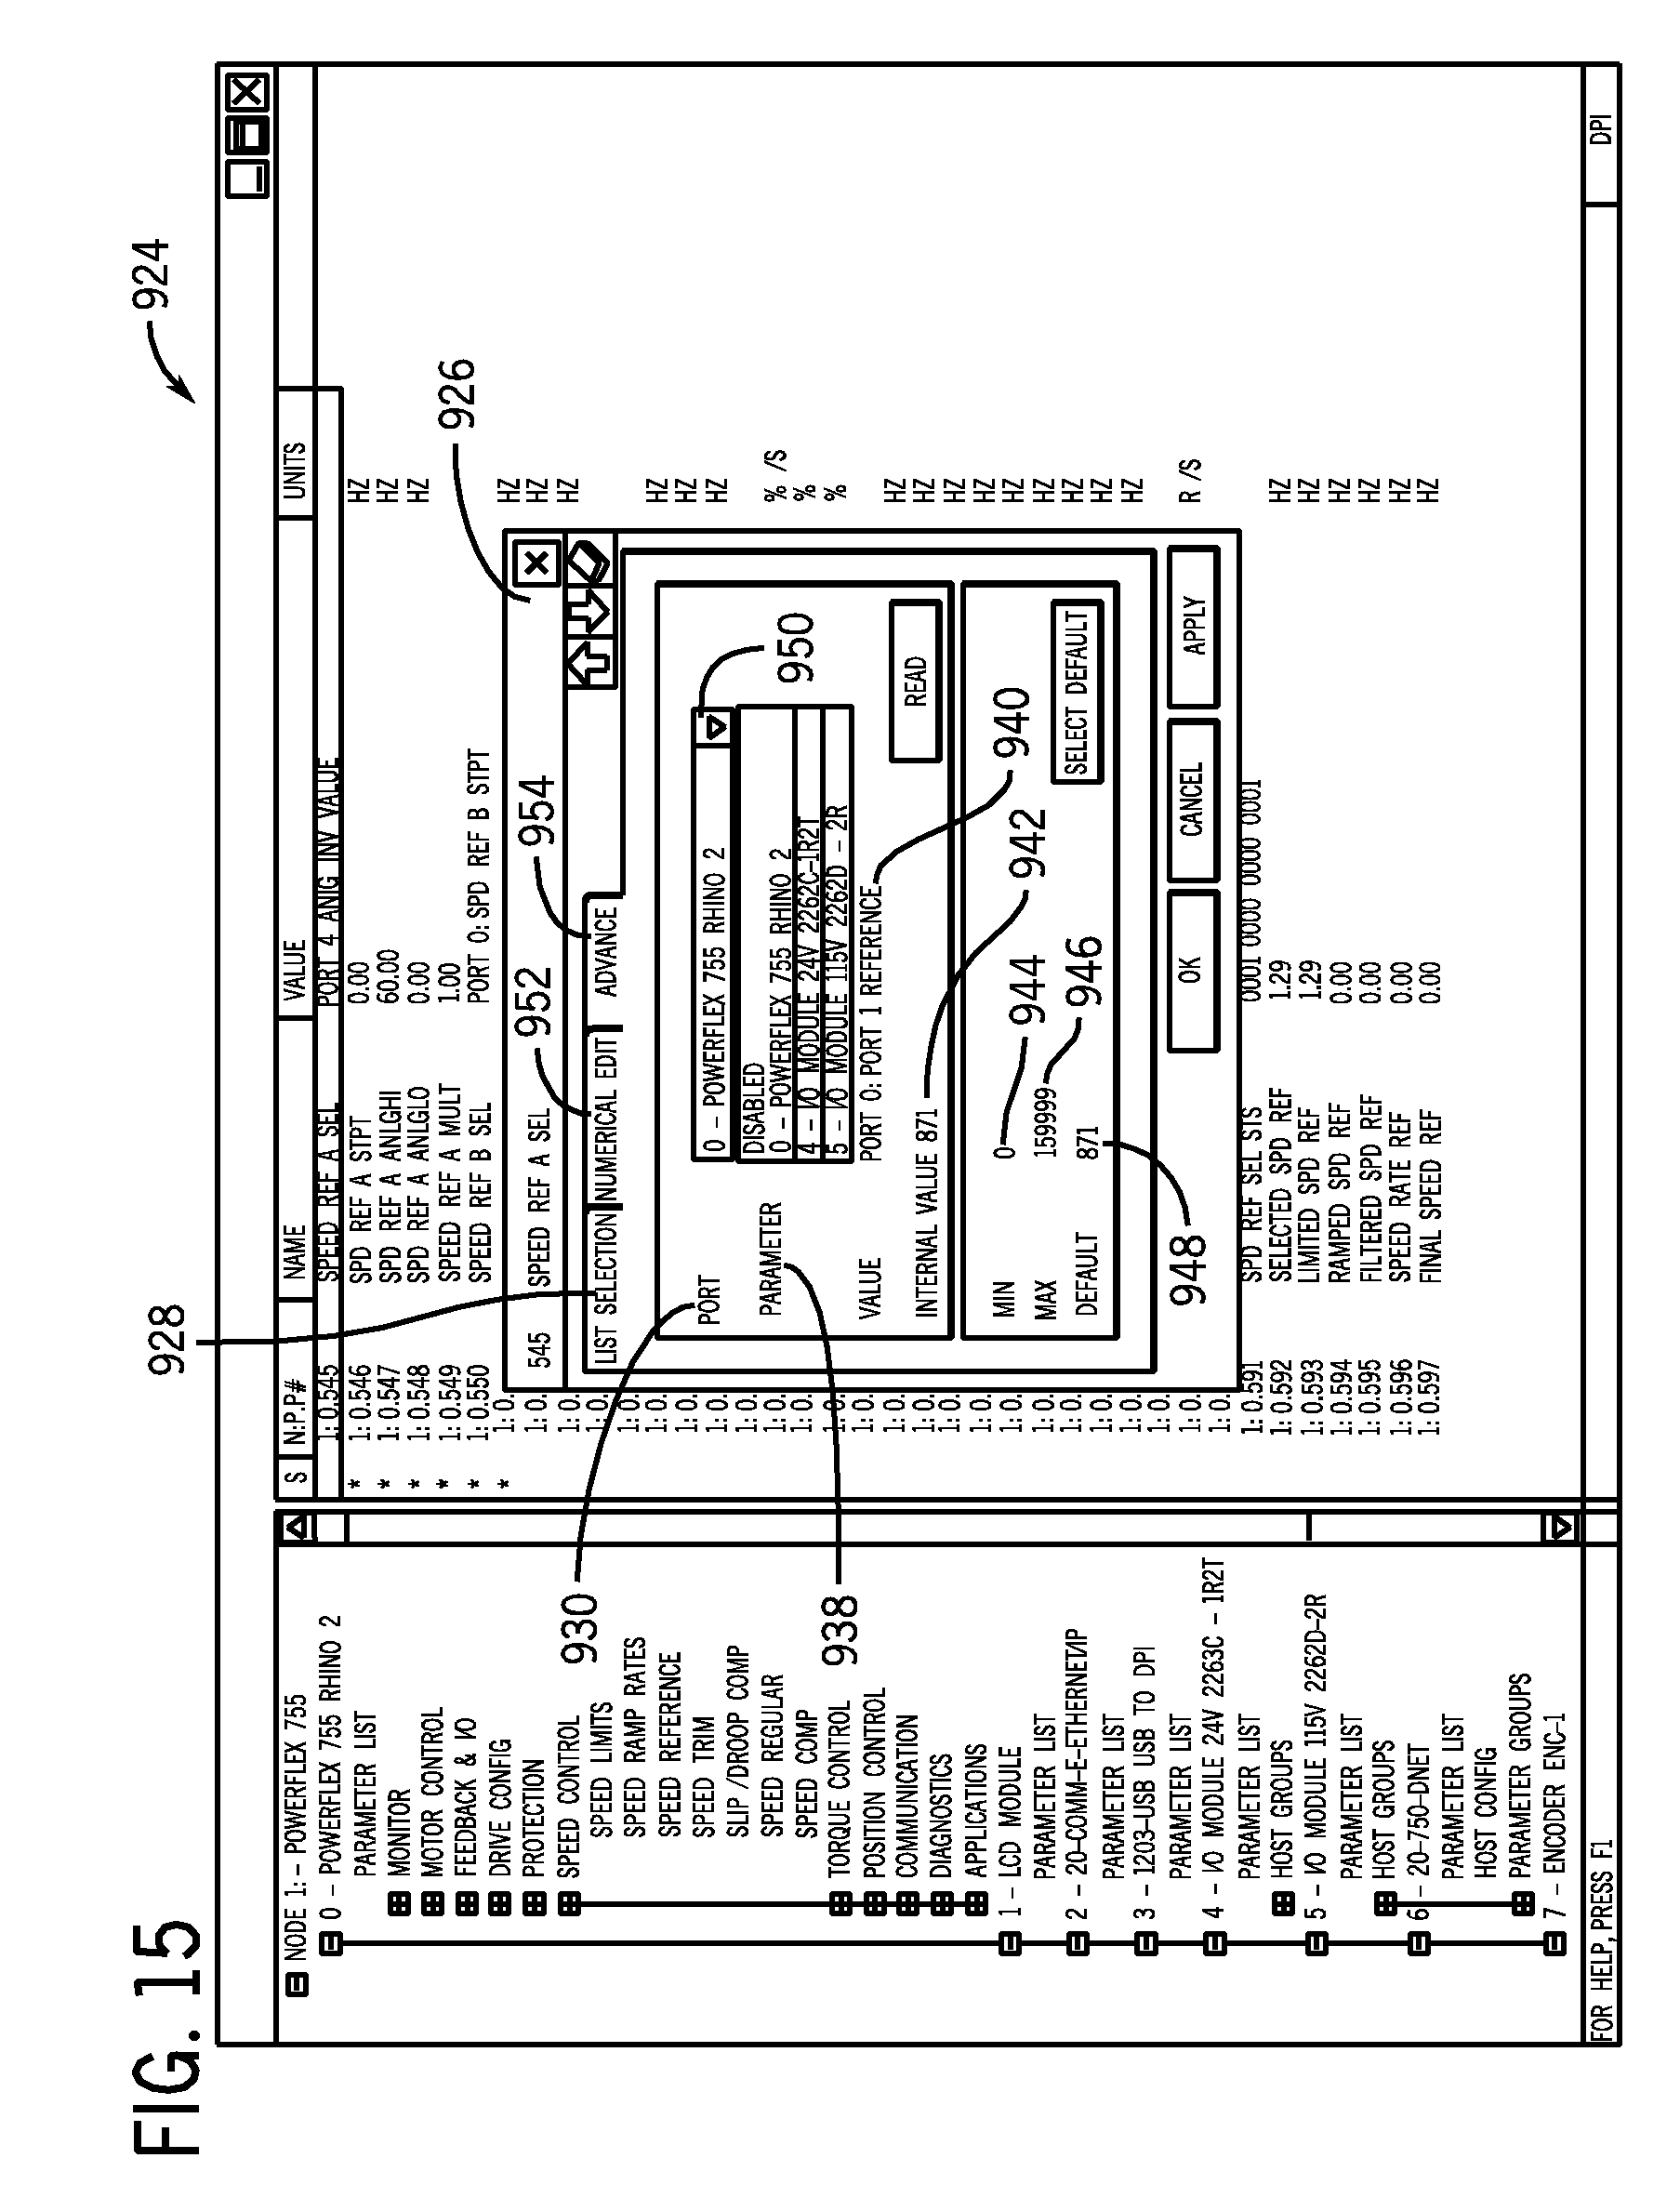 powerflex 700 local/remote wiring diagram